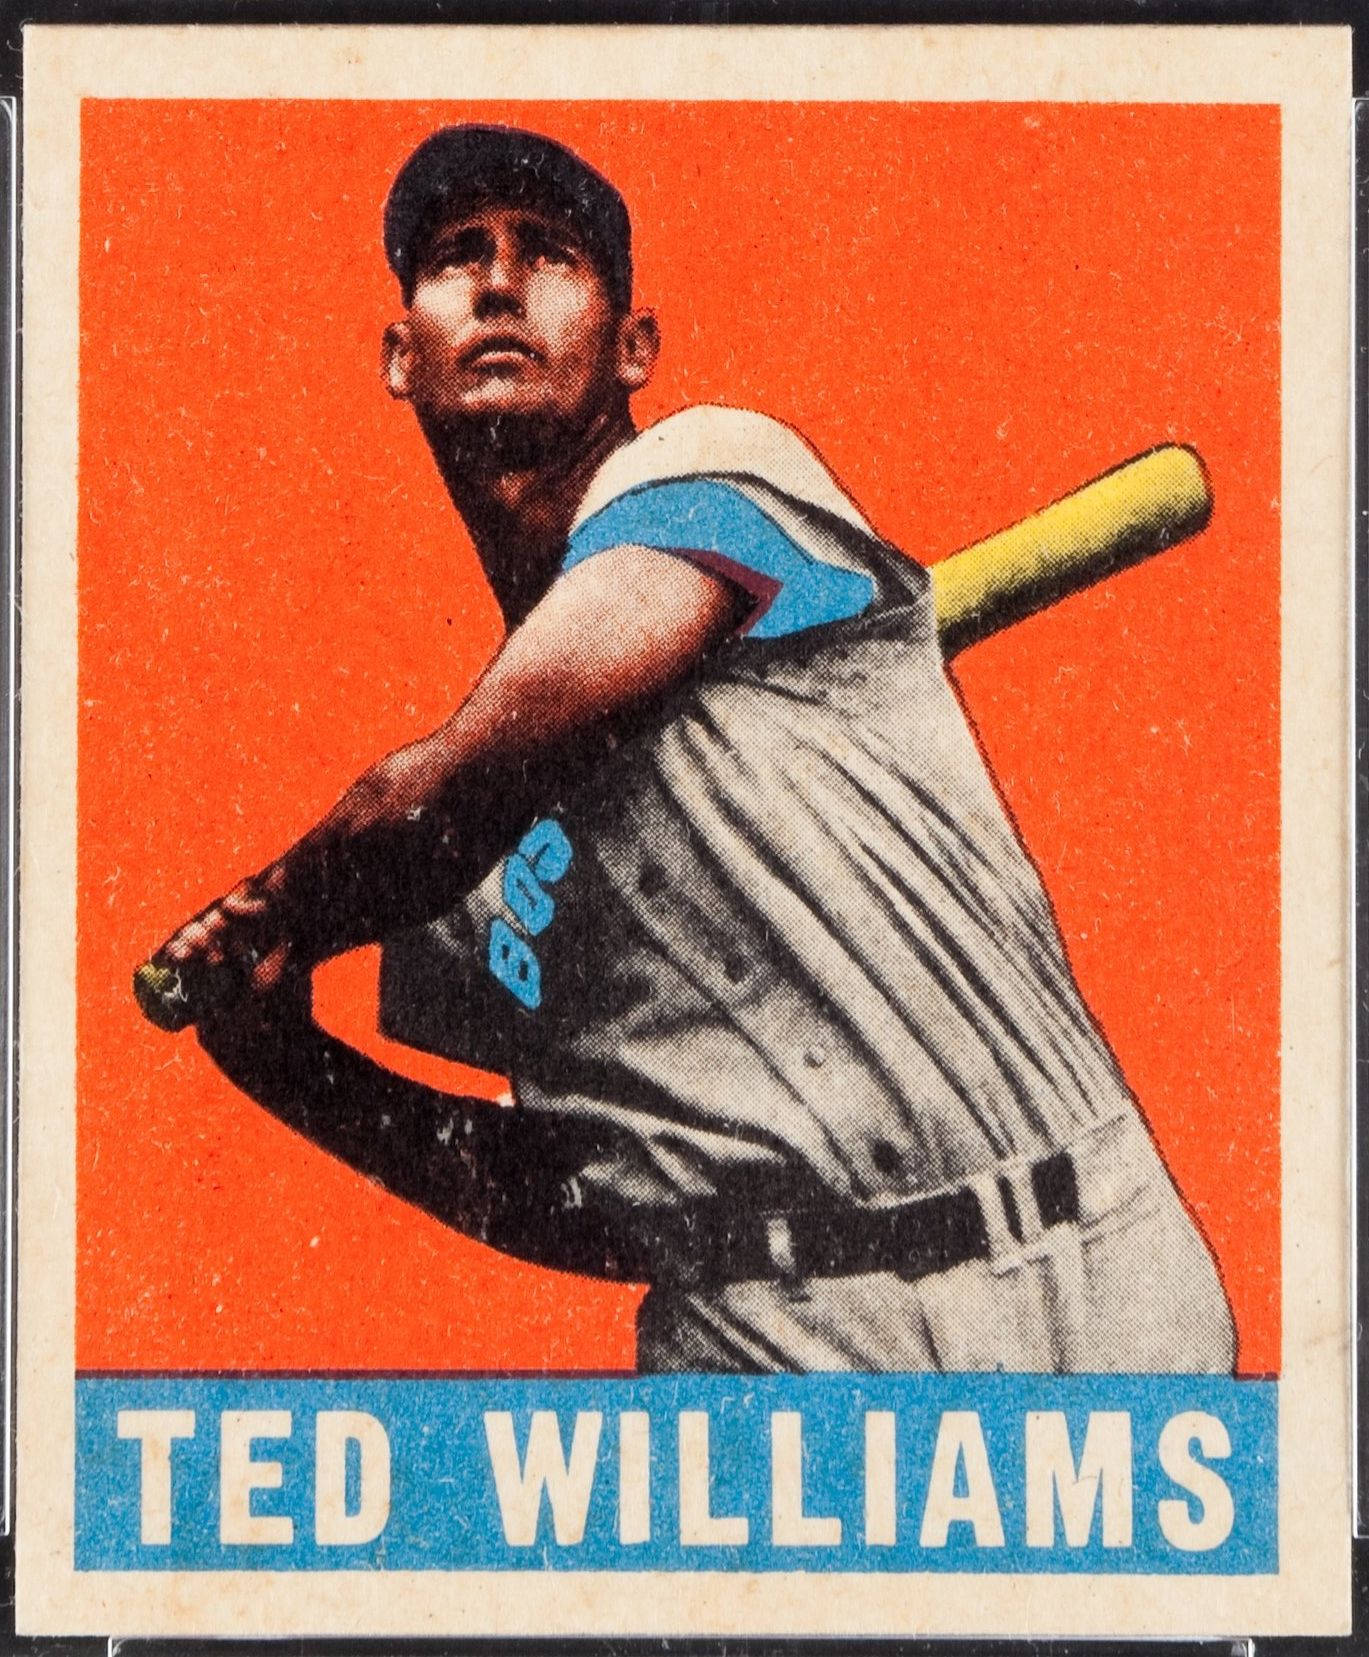 Ted Williams Vintage Baseball Card Wallpaper